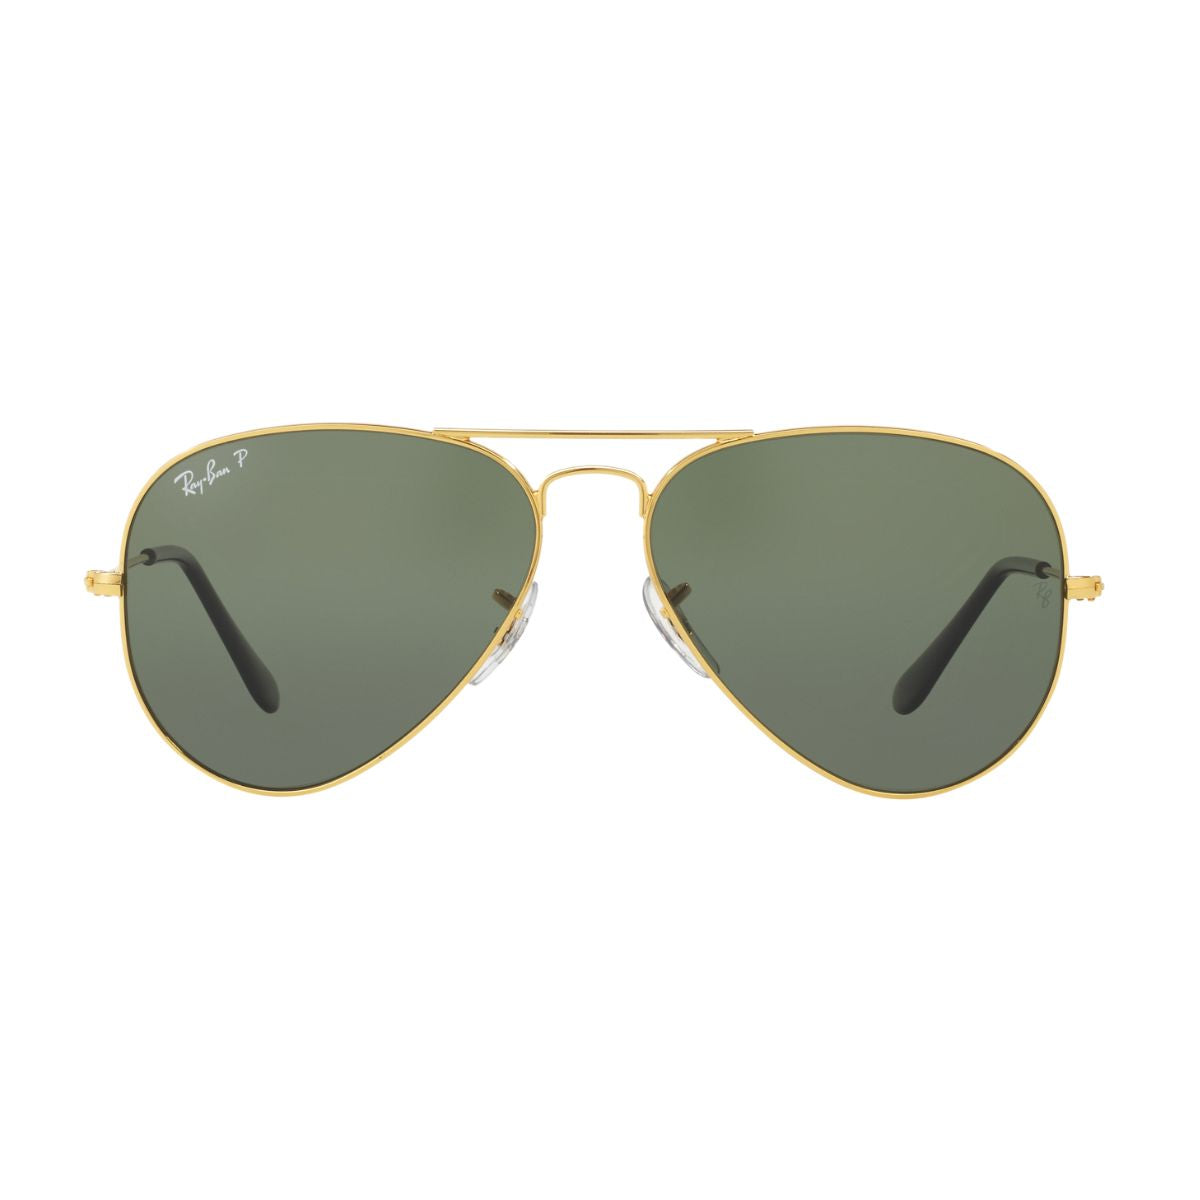 "Rayban 3025 001/58 Polarized Sunglasses For Men's At Optorium"